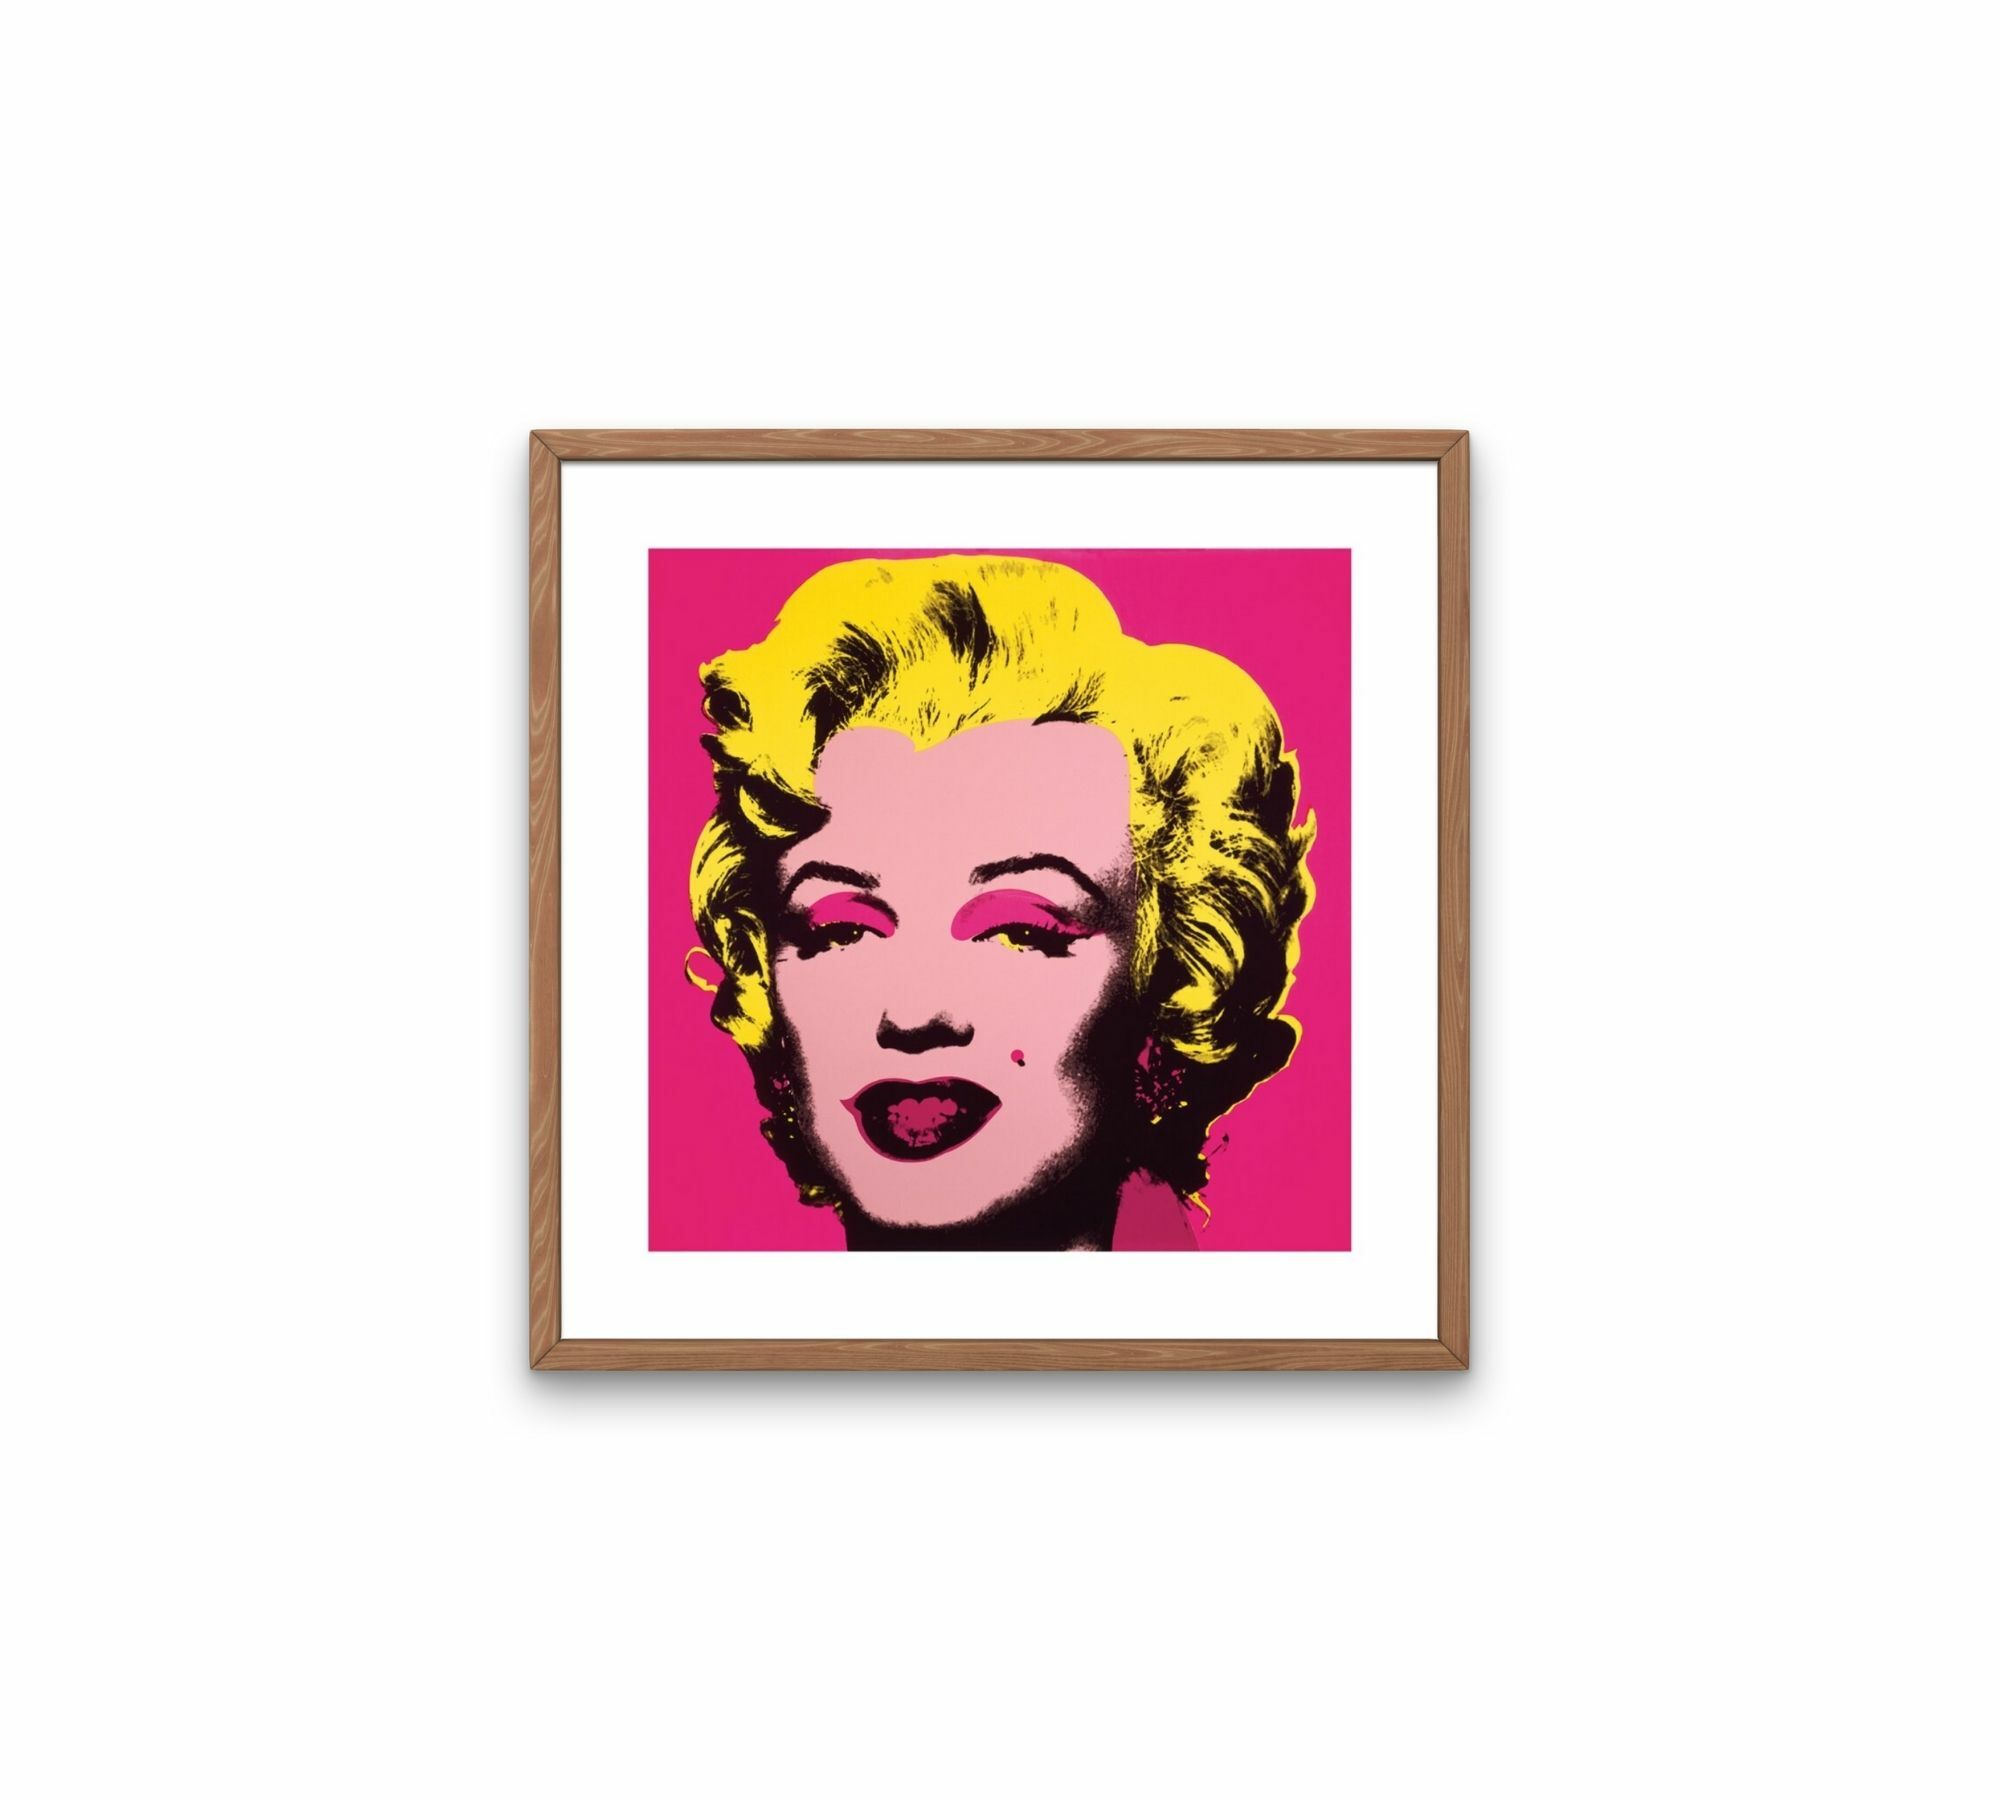 Marilyn Monroe (Hot Pink), 1967 - Andy Warhol 40 x 40 cm 3